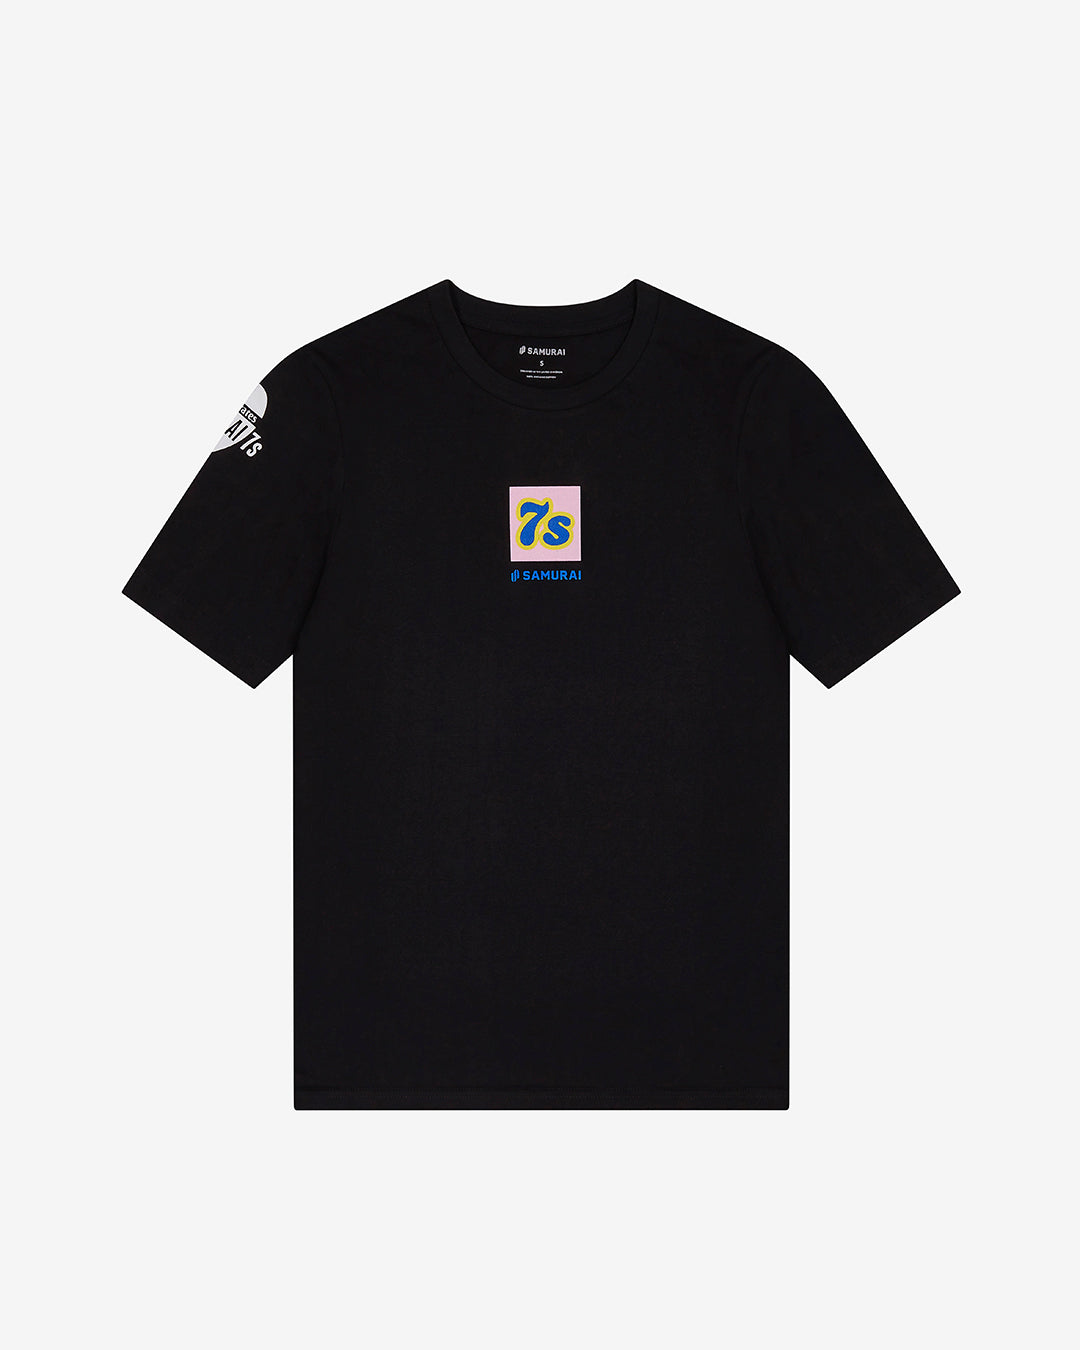 ED7:09 - Bubblegum T-Shirt - Black